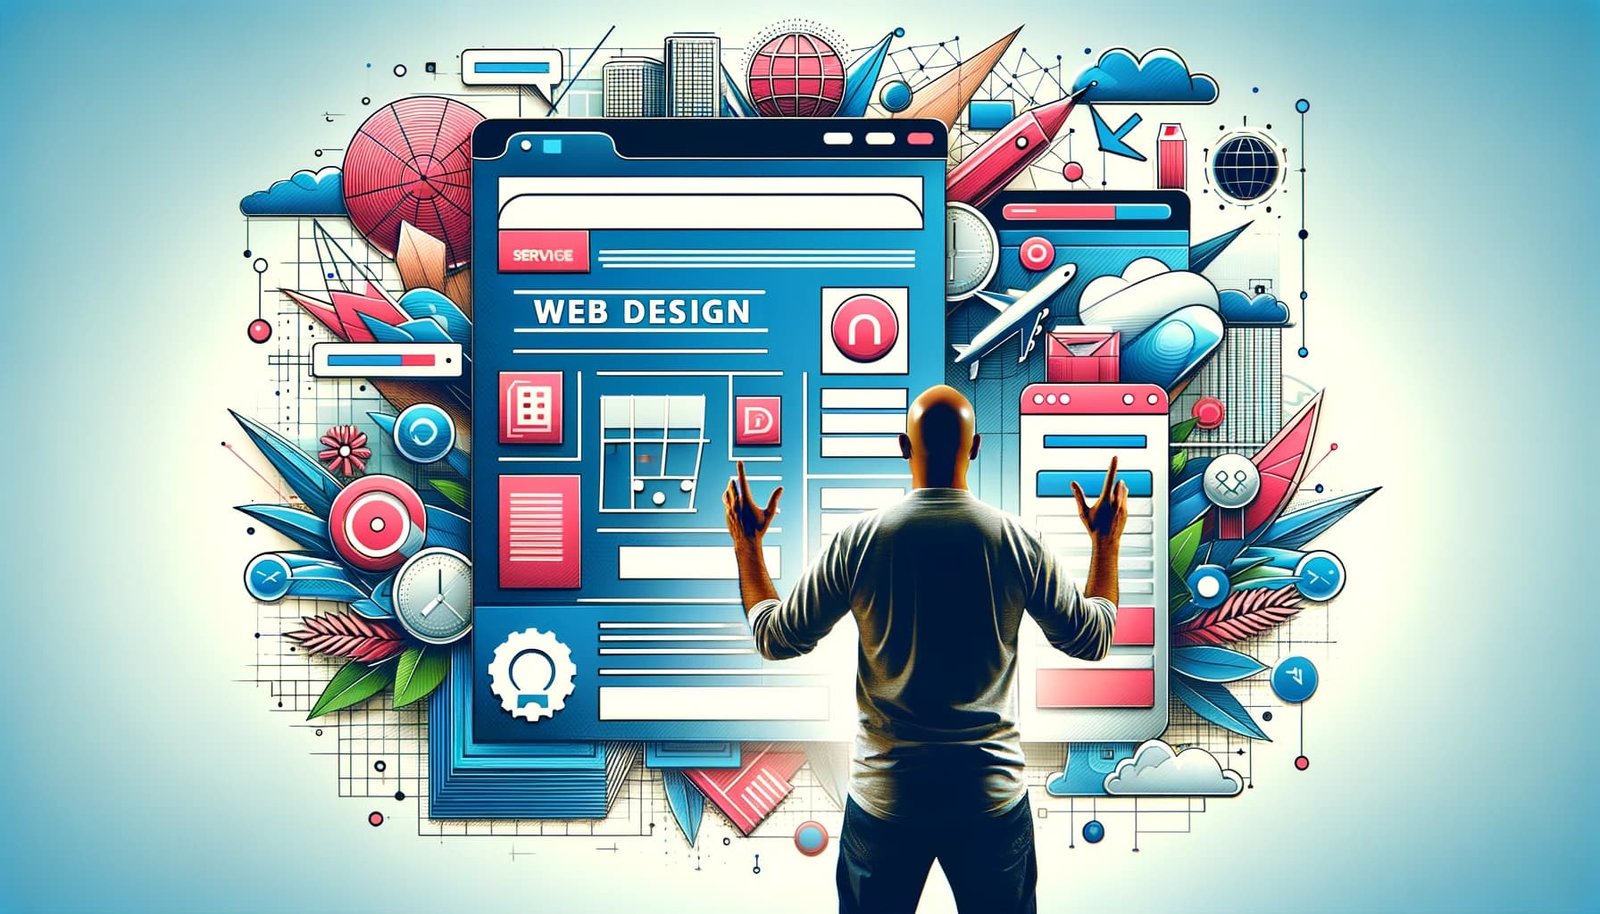 Web Design Image 1